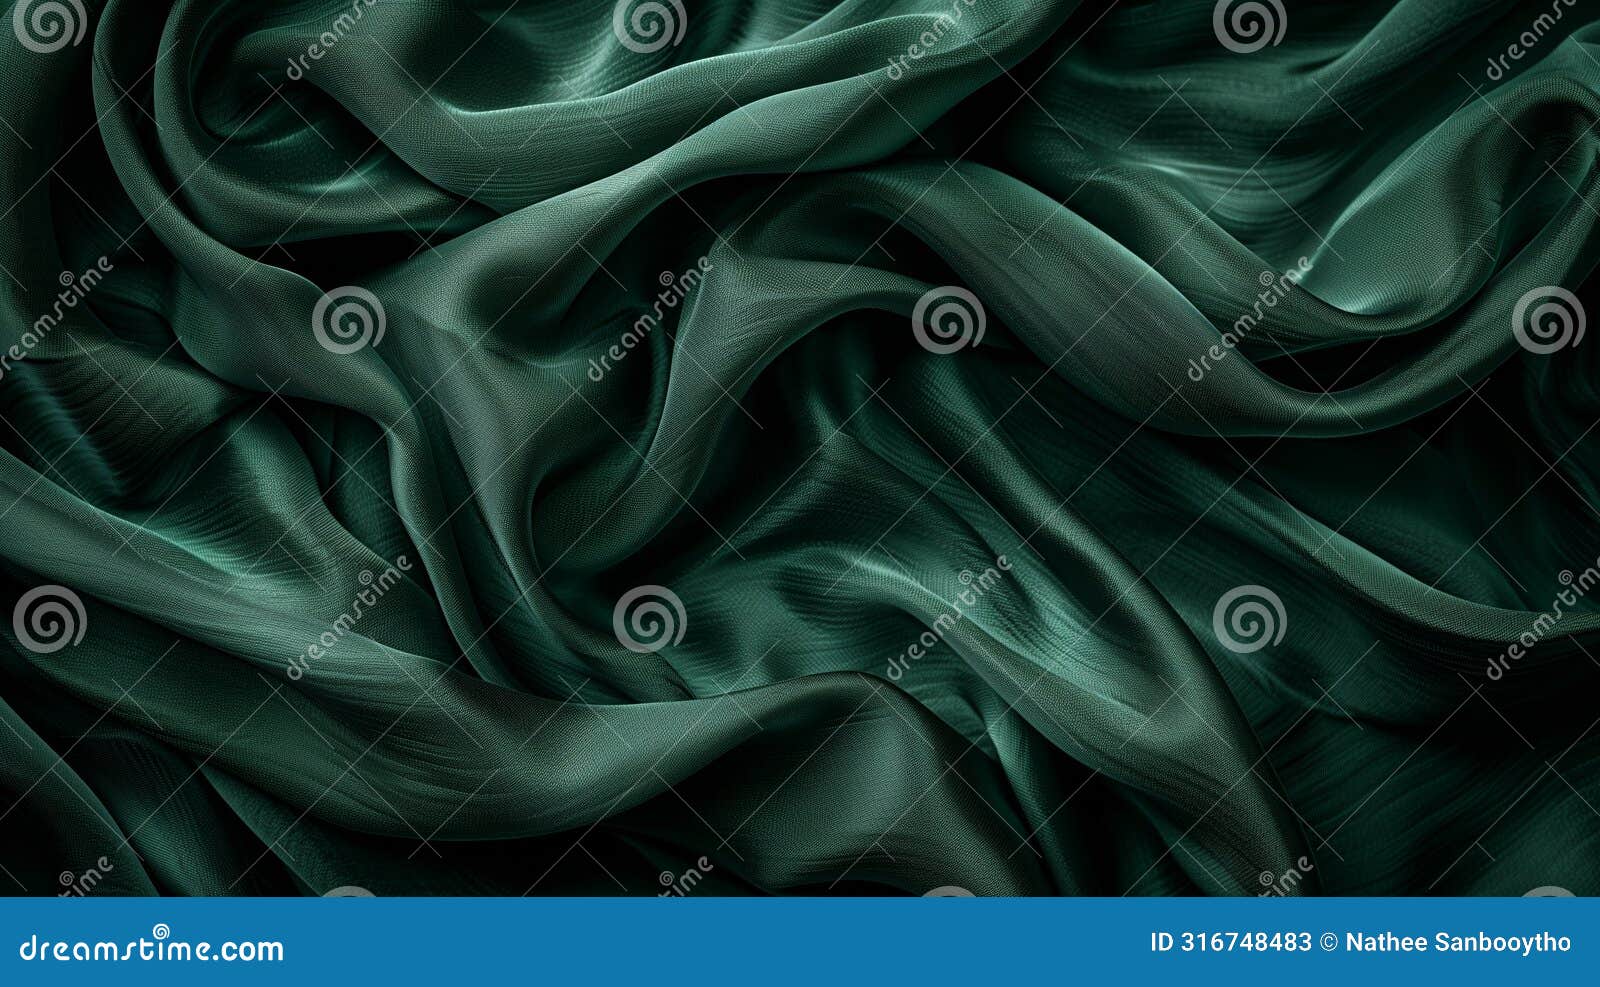 luxurious dark green satin with fluid folds